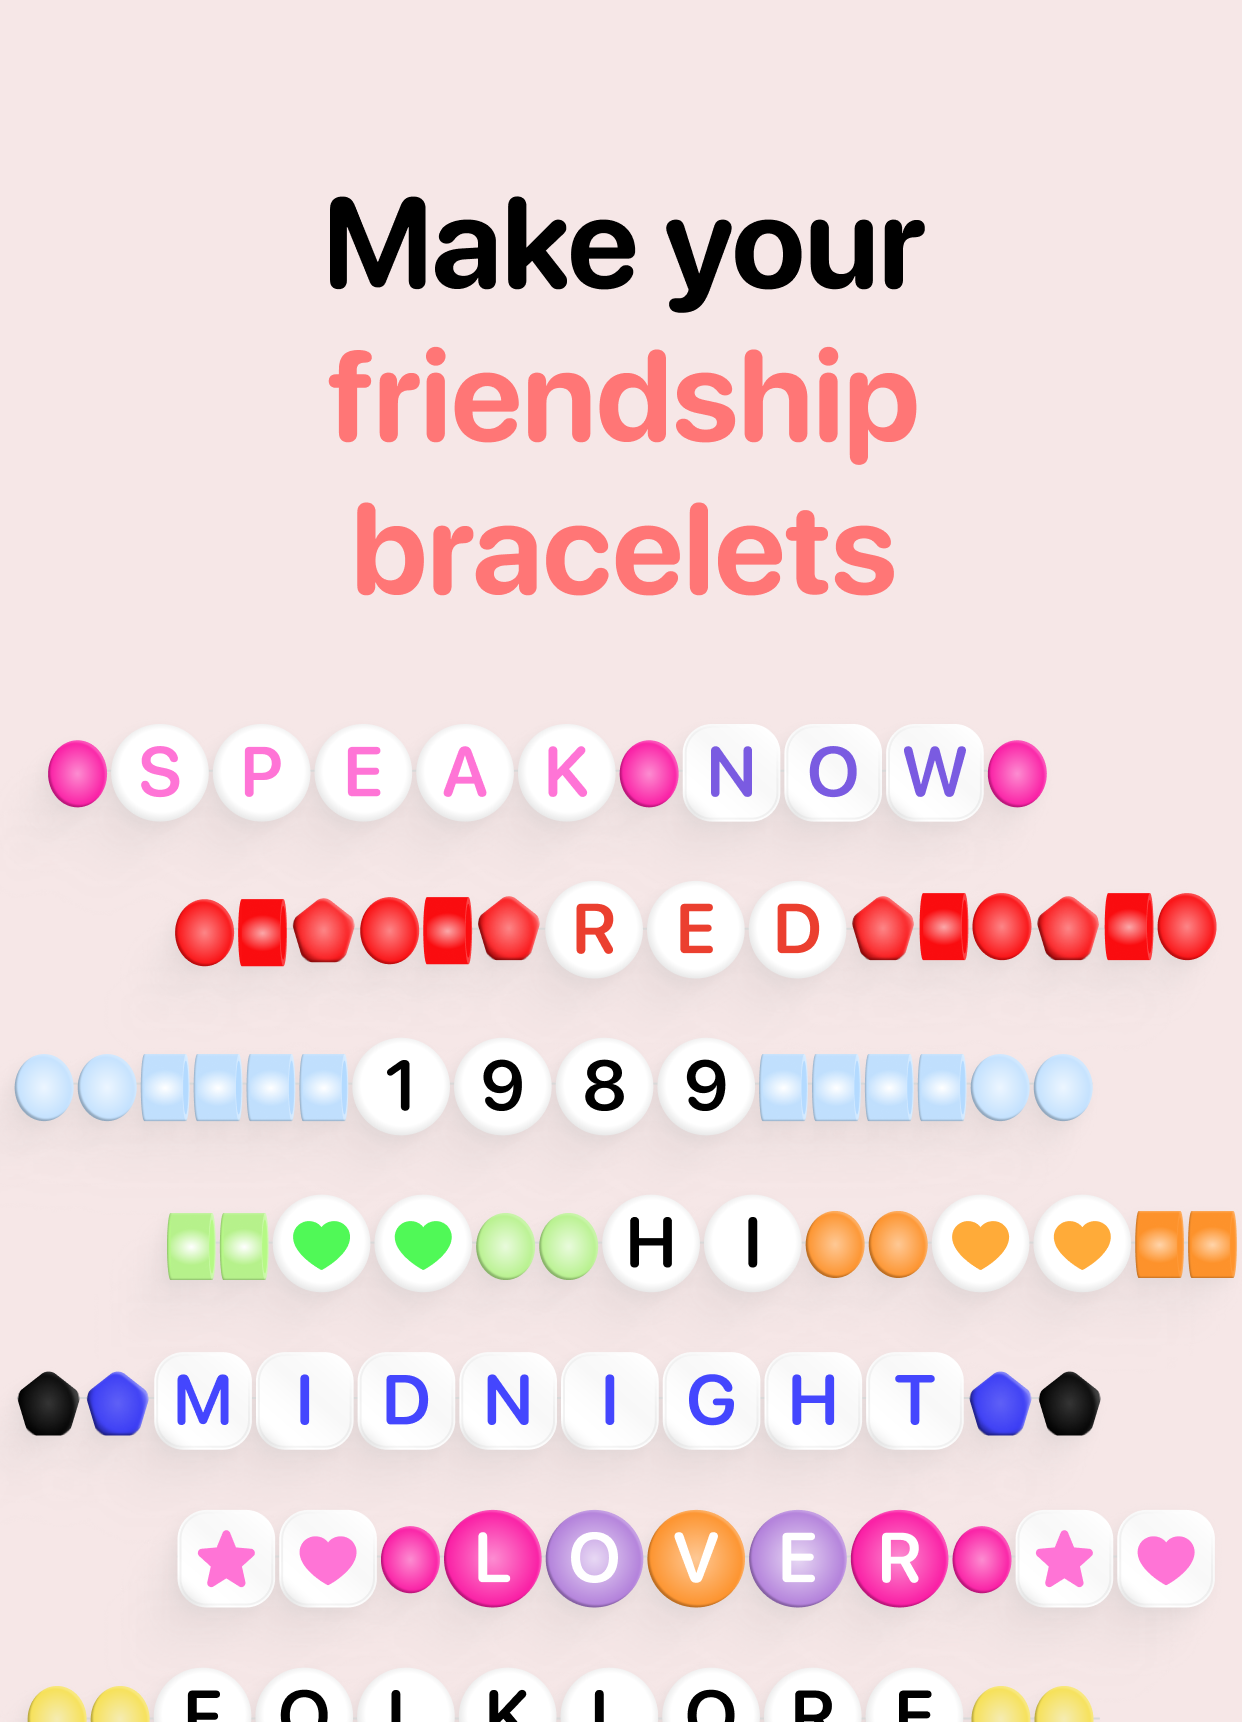 Buy SpiceBox, i-Loom Bracelet Maker, friendship bracelet making kit |  Toys